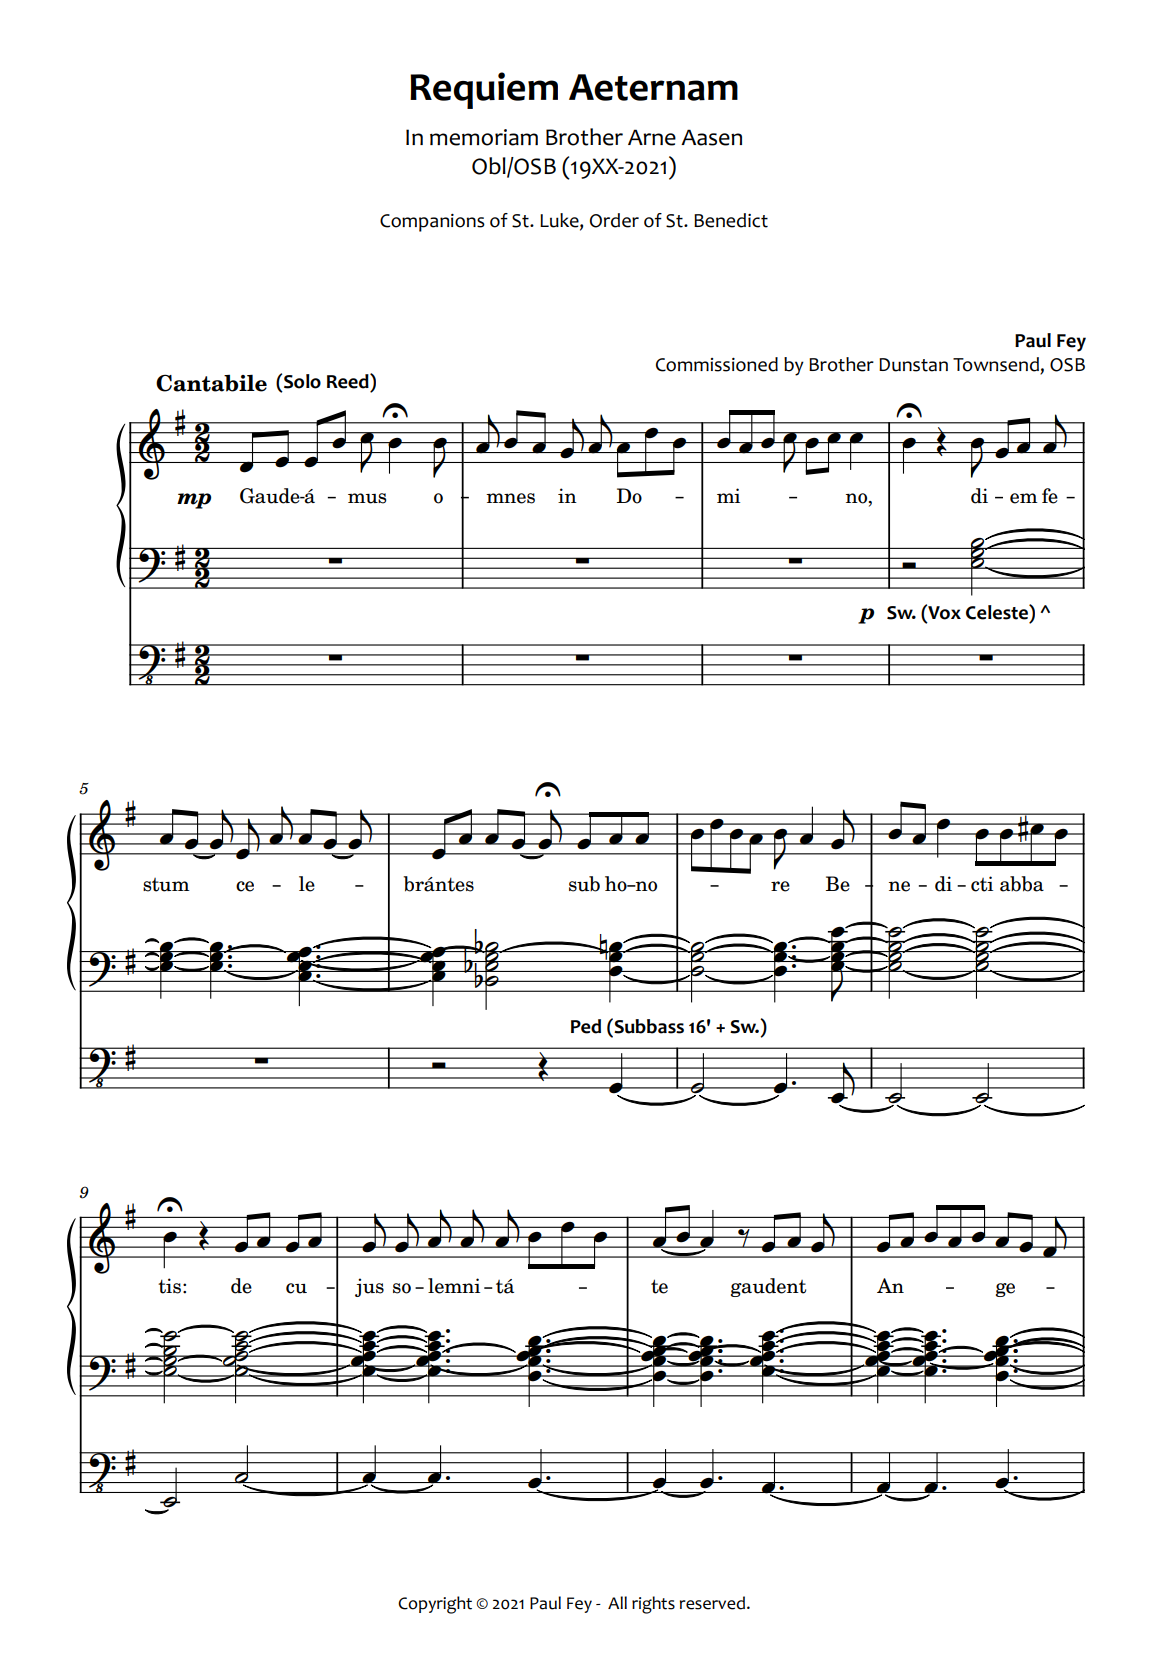 "Requiem Aeternam" for Organ (Sheet Music) - Music for Pipe Organ by Paul Fey